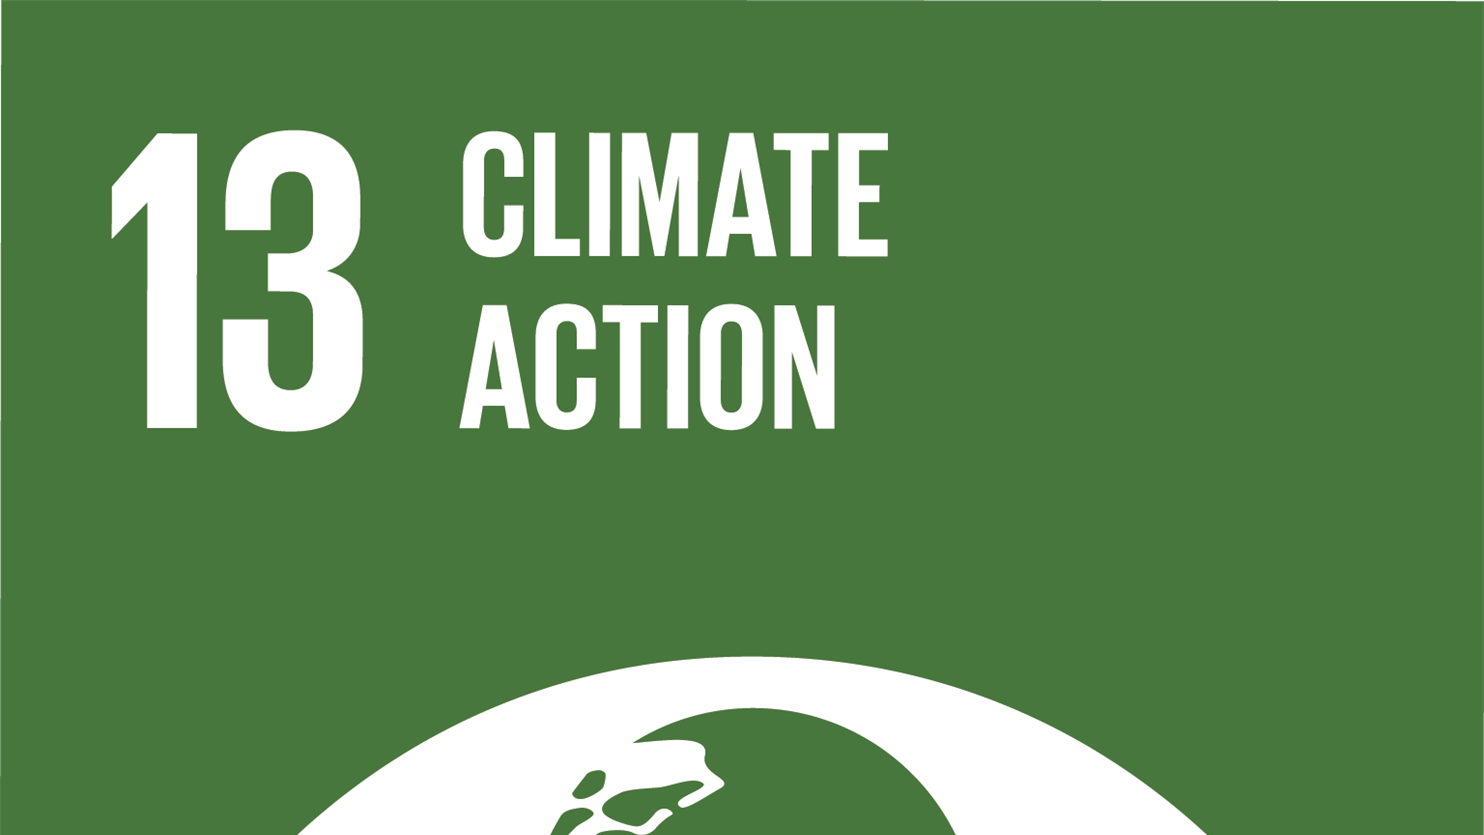 Sustainability goal 13: Climate Action